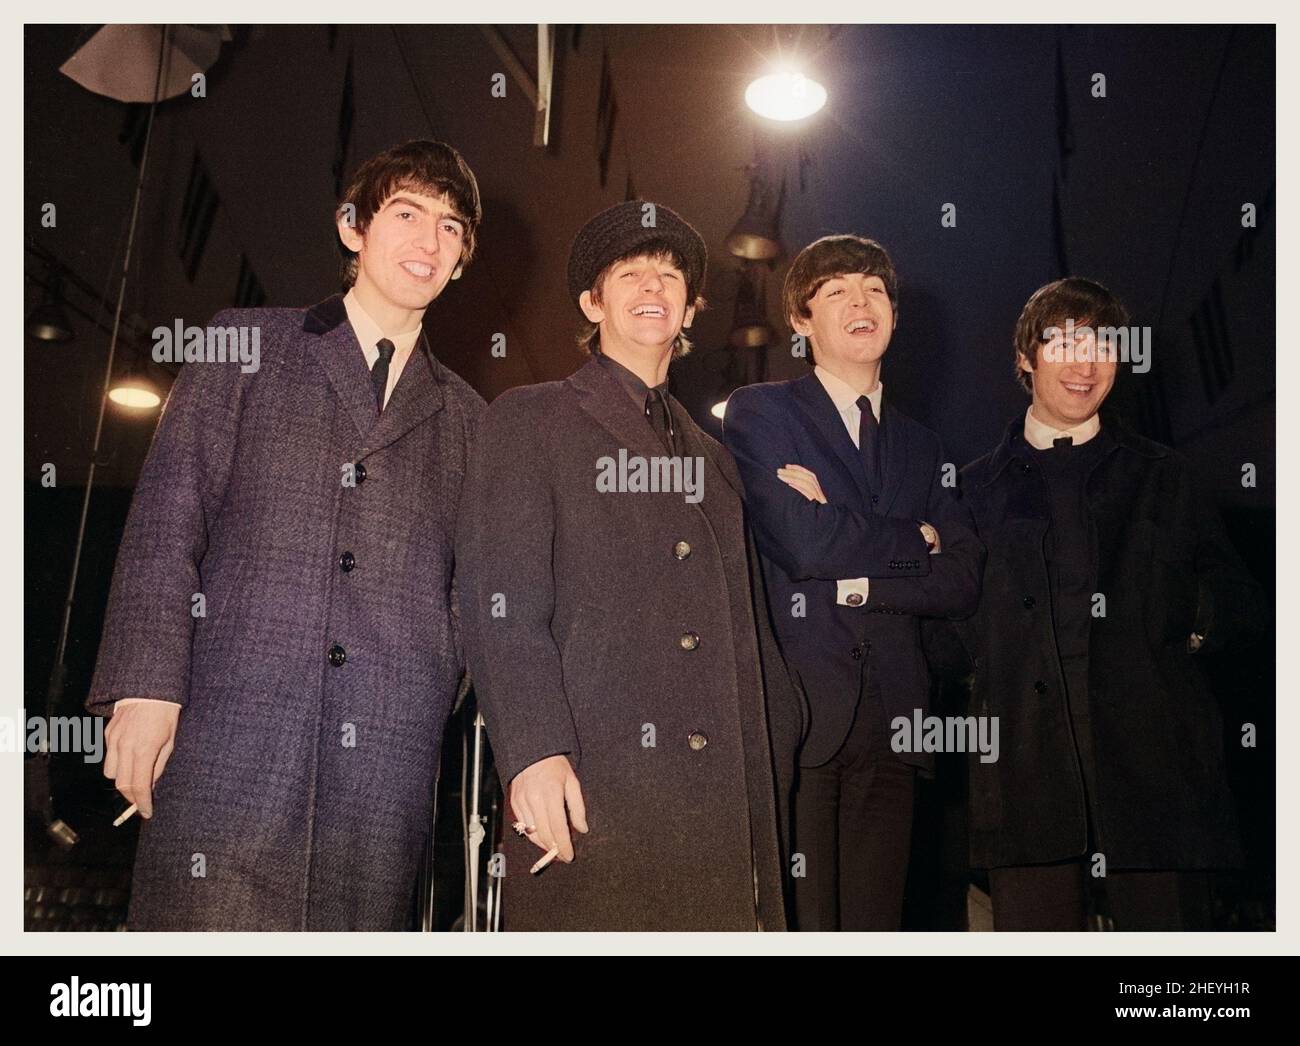 Die Beatles. 1964. Februar 11. Trikosko, Marion S., Fotografin. Stunden vor dem ersten US-Konzert der Beatles, dem Washington Coliseum. Koloriertes Foto. Stockfoto